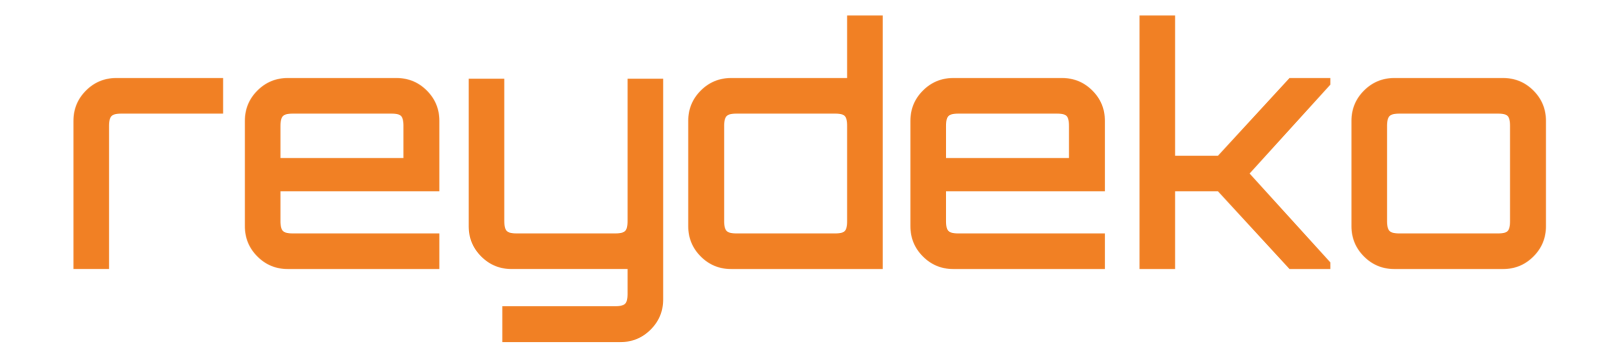 Reydeko Logo